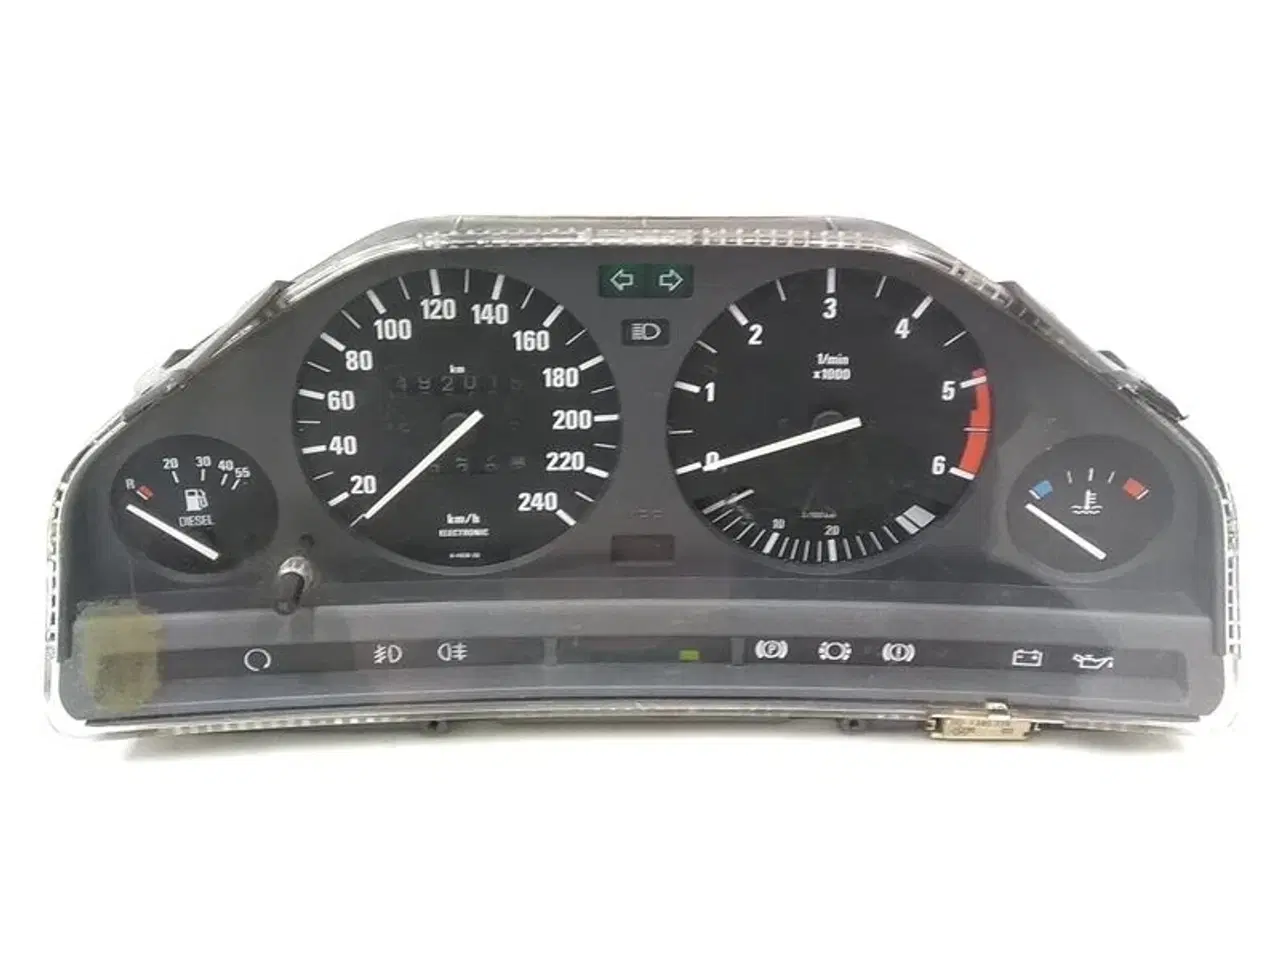 Billede 1 - Instrumentkombi MotoMeter Brugt 492015 km E13284 BMW E30